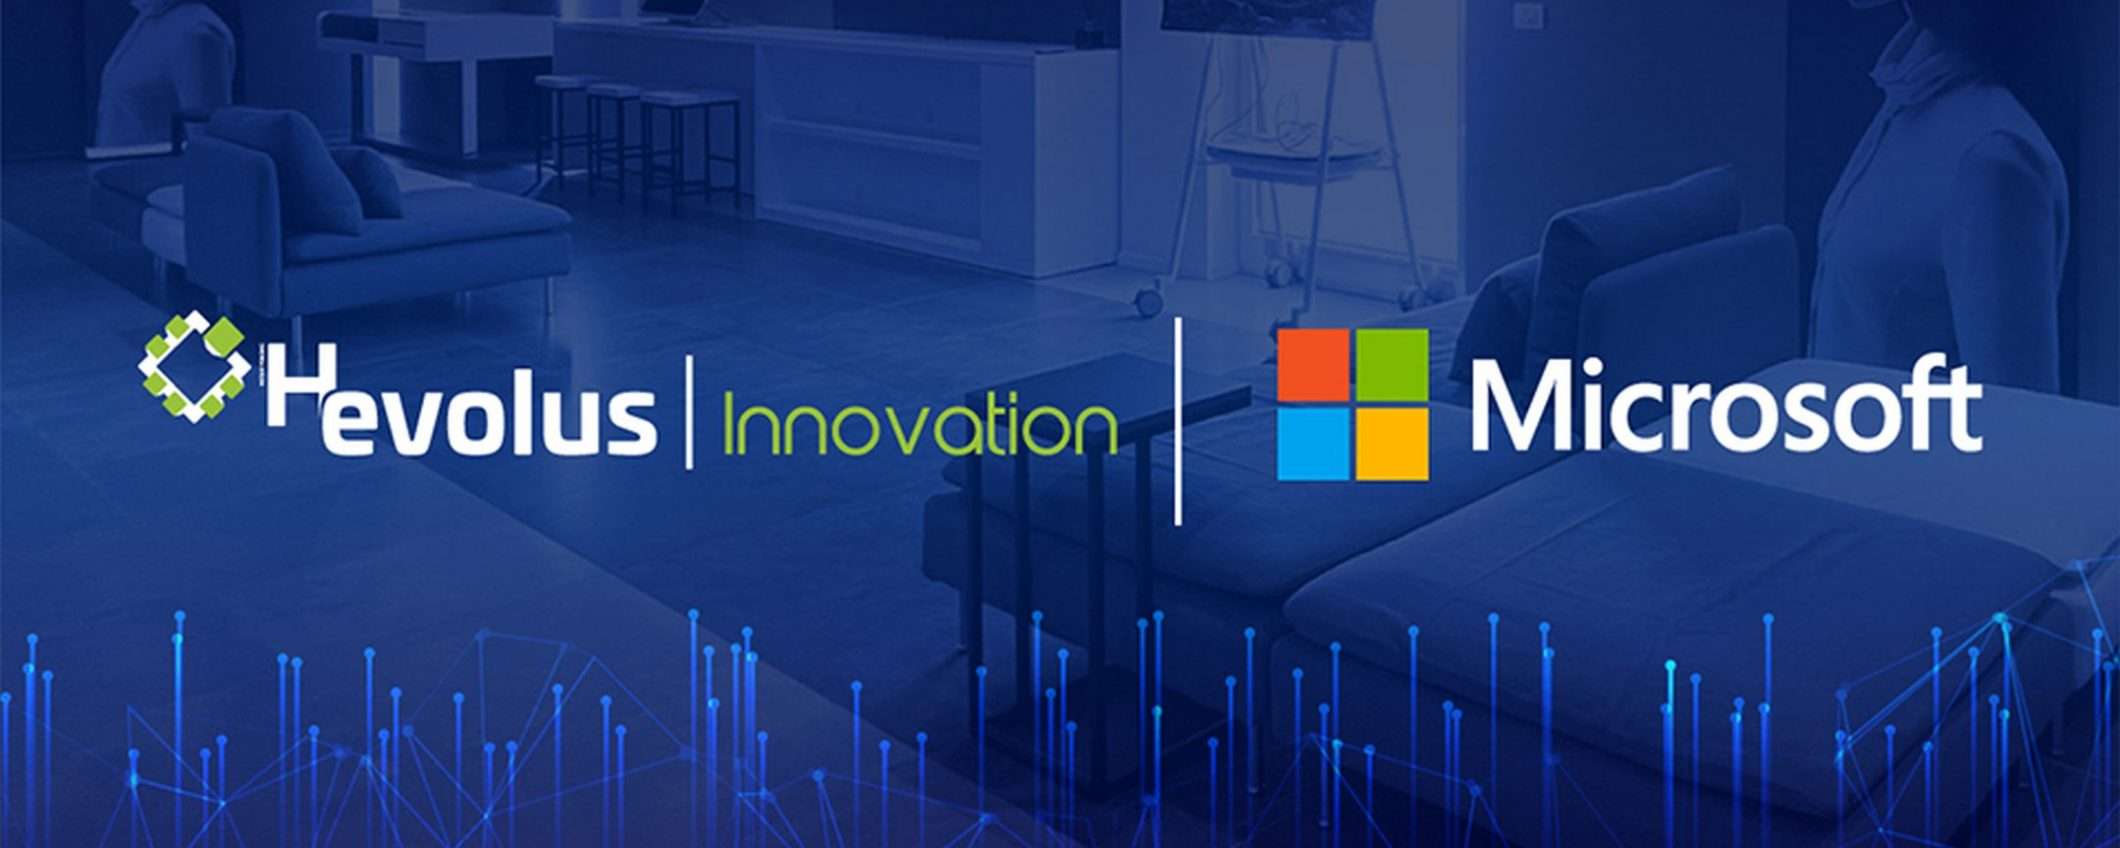 Microsoft Italia apre il South Innovation Center